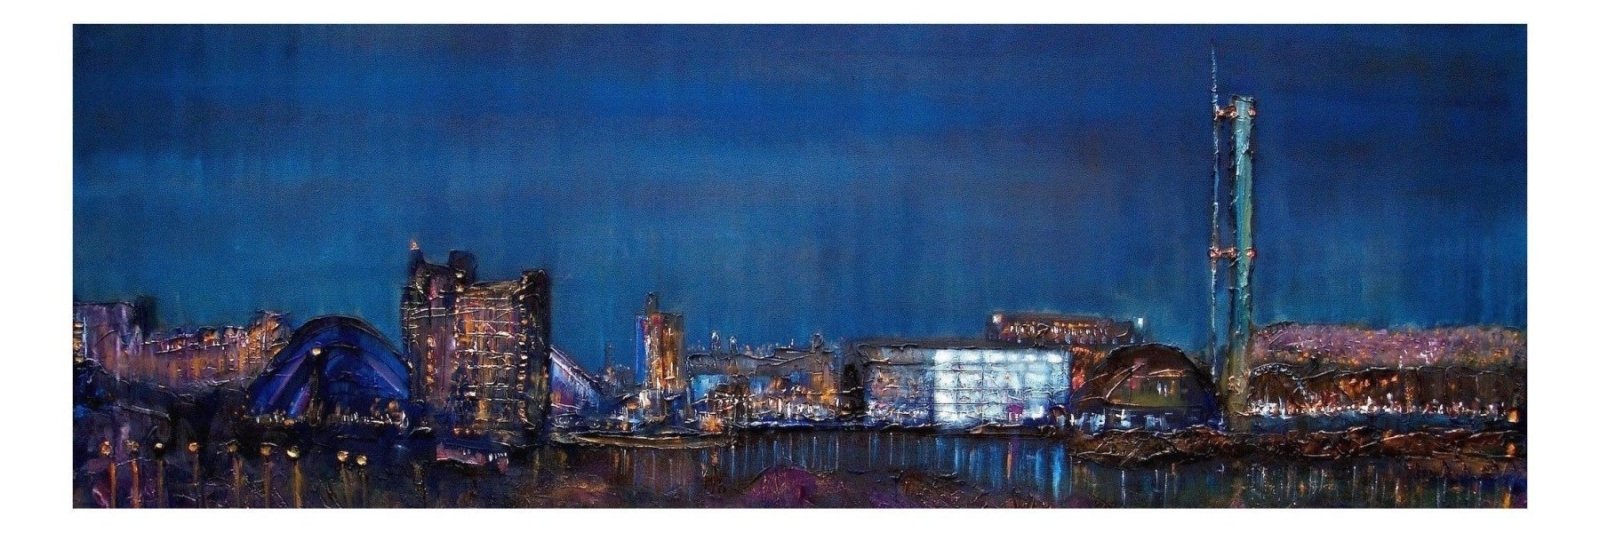 Glasgow-Panoramic Prints-Edinburgh & Glasgow Art Gallery-Paintings, Prints, Homeware, Art Gifts From Scotland By Scottish Artist Kevin Hunter